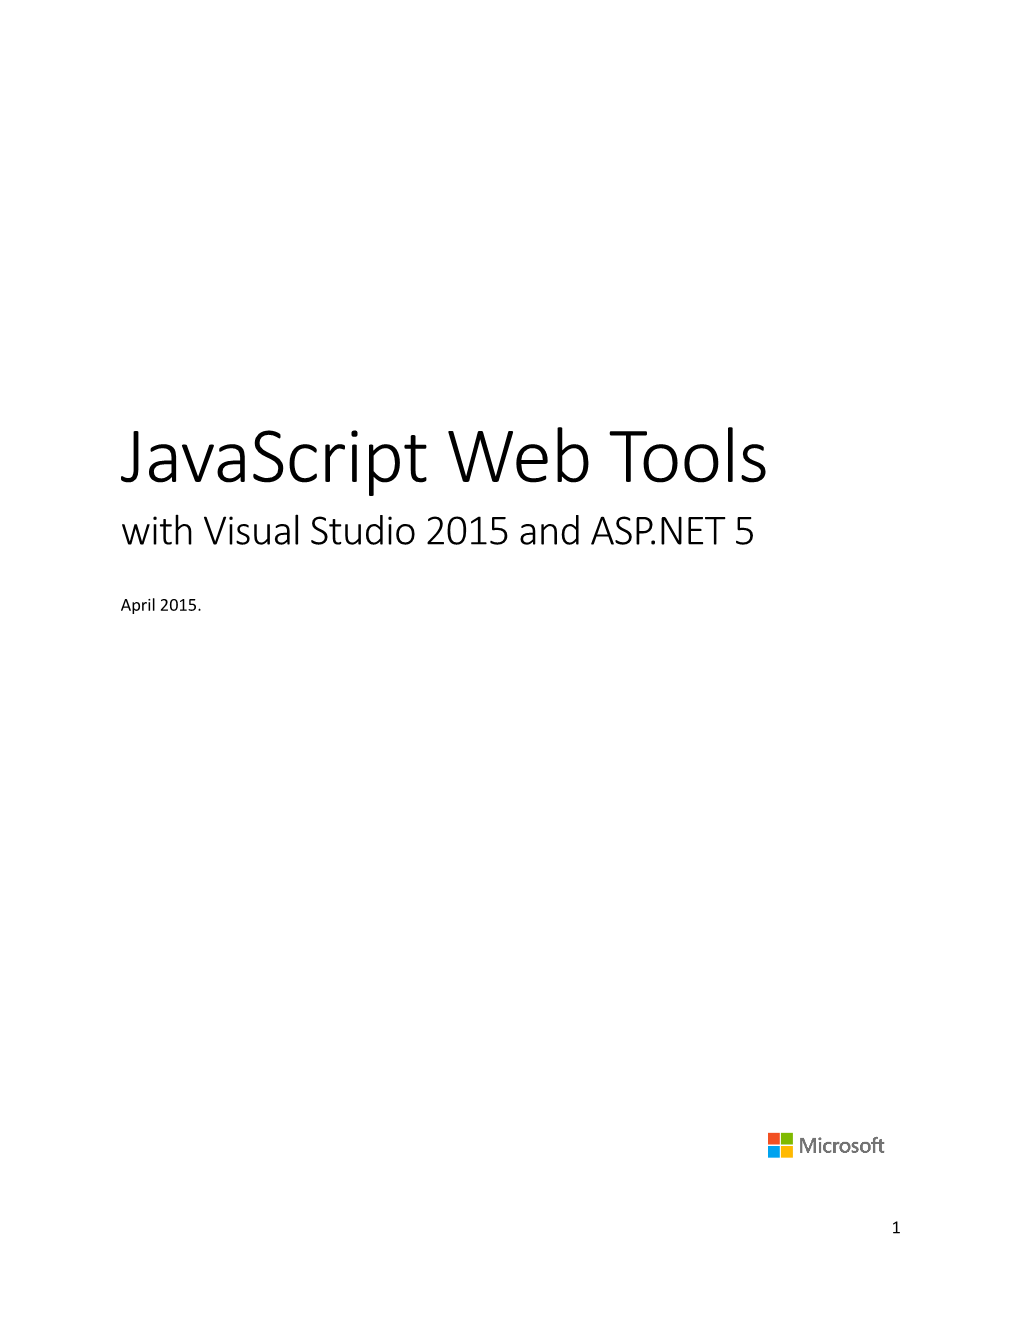 Javascript Web Tools with Visual Studio 2015 and ASP.NET 5